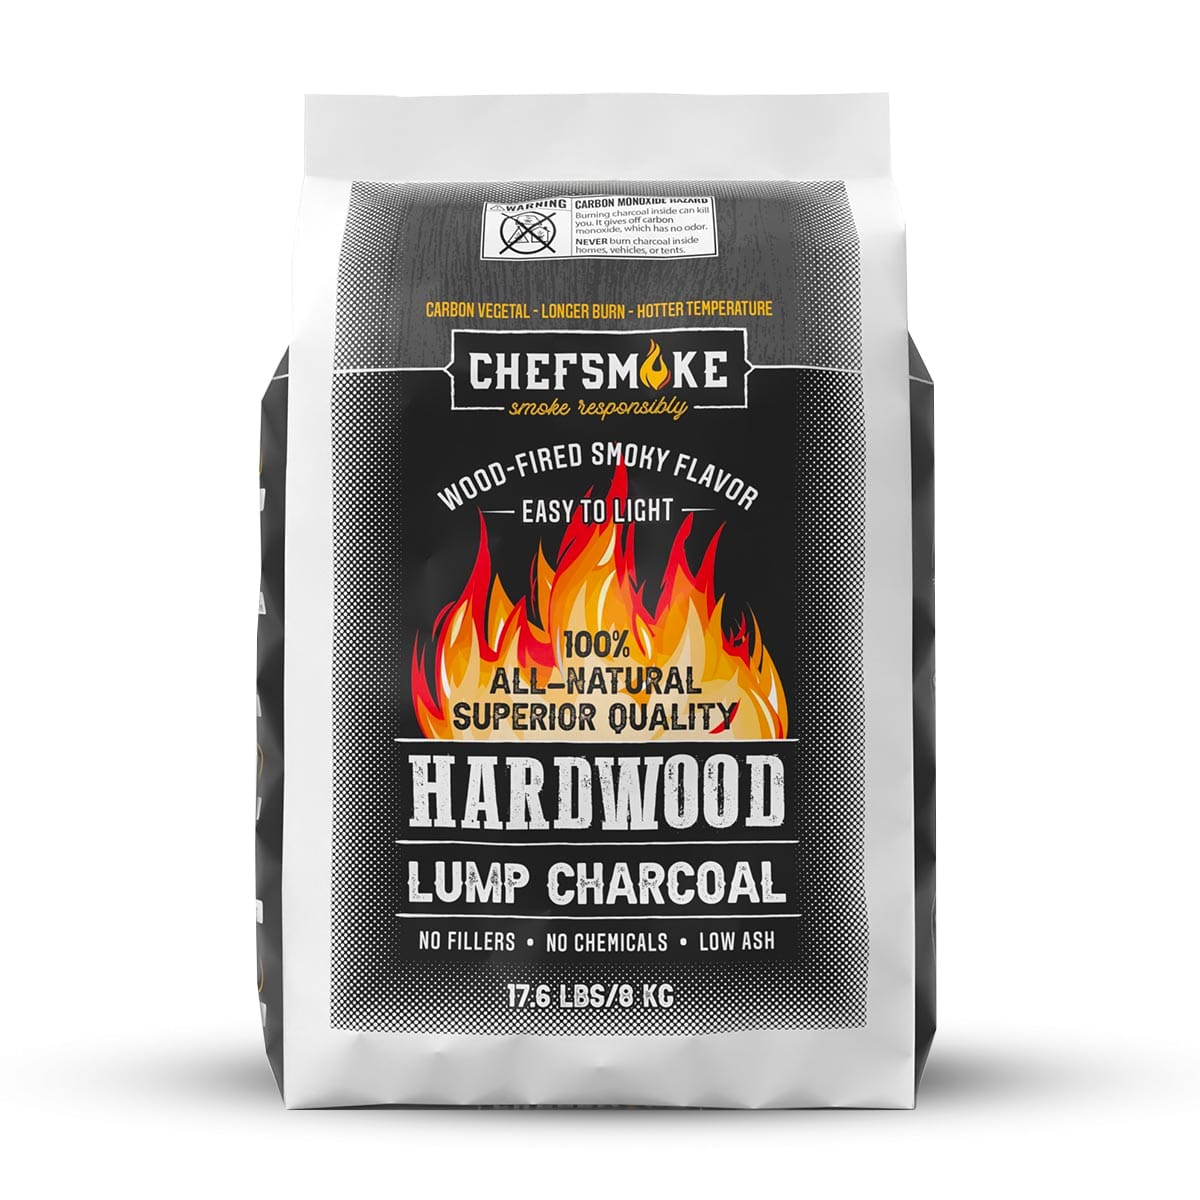 Charcoal, 17.6LB Charcoal, Long Lasting Hardwood LUMP Charcoal, Bigger Chunks, HIGH Heat, Low ASH, All Natural, Best Charcoal for The Barrel BBQ, CHEFSMOKE Company